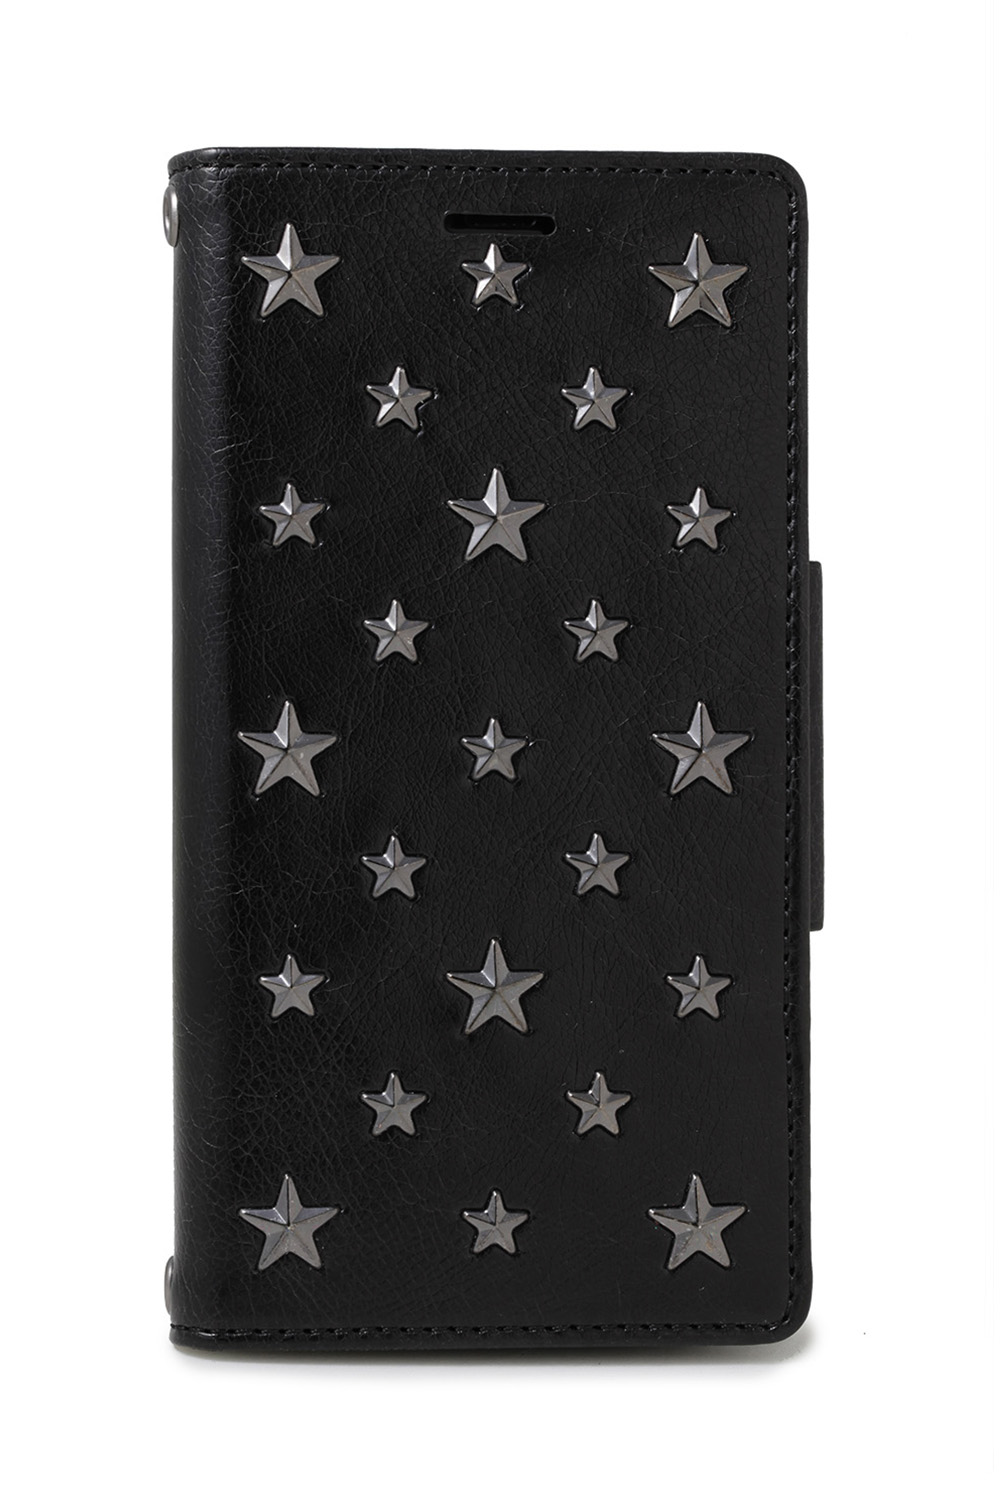 Star Studs 807 For iPhone X Case - Sinra Design Works | シンラ 